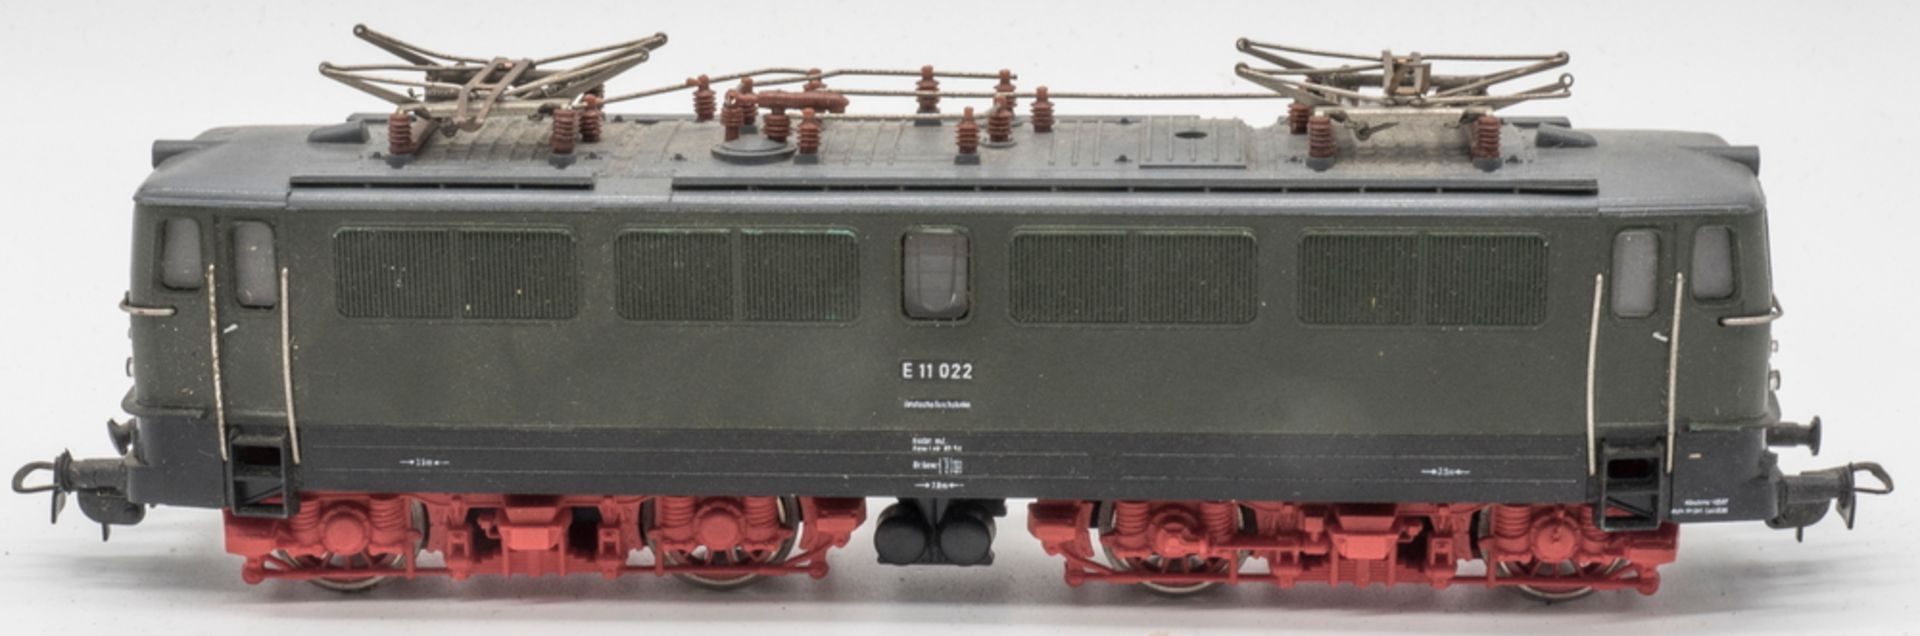 Piko E - Lokomotive E11, BN E 11 022. Spur H0. Funktion nicht geprüft. - Image 2 of 4